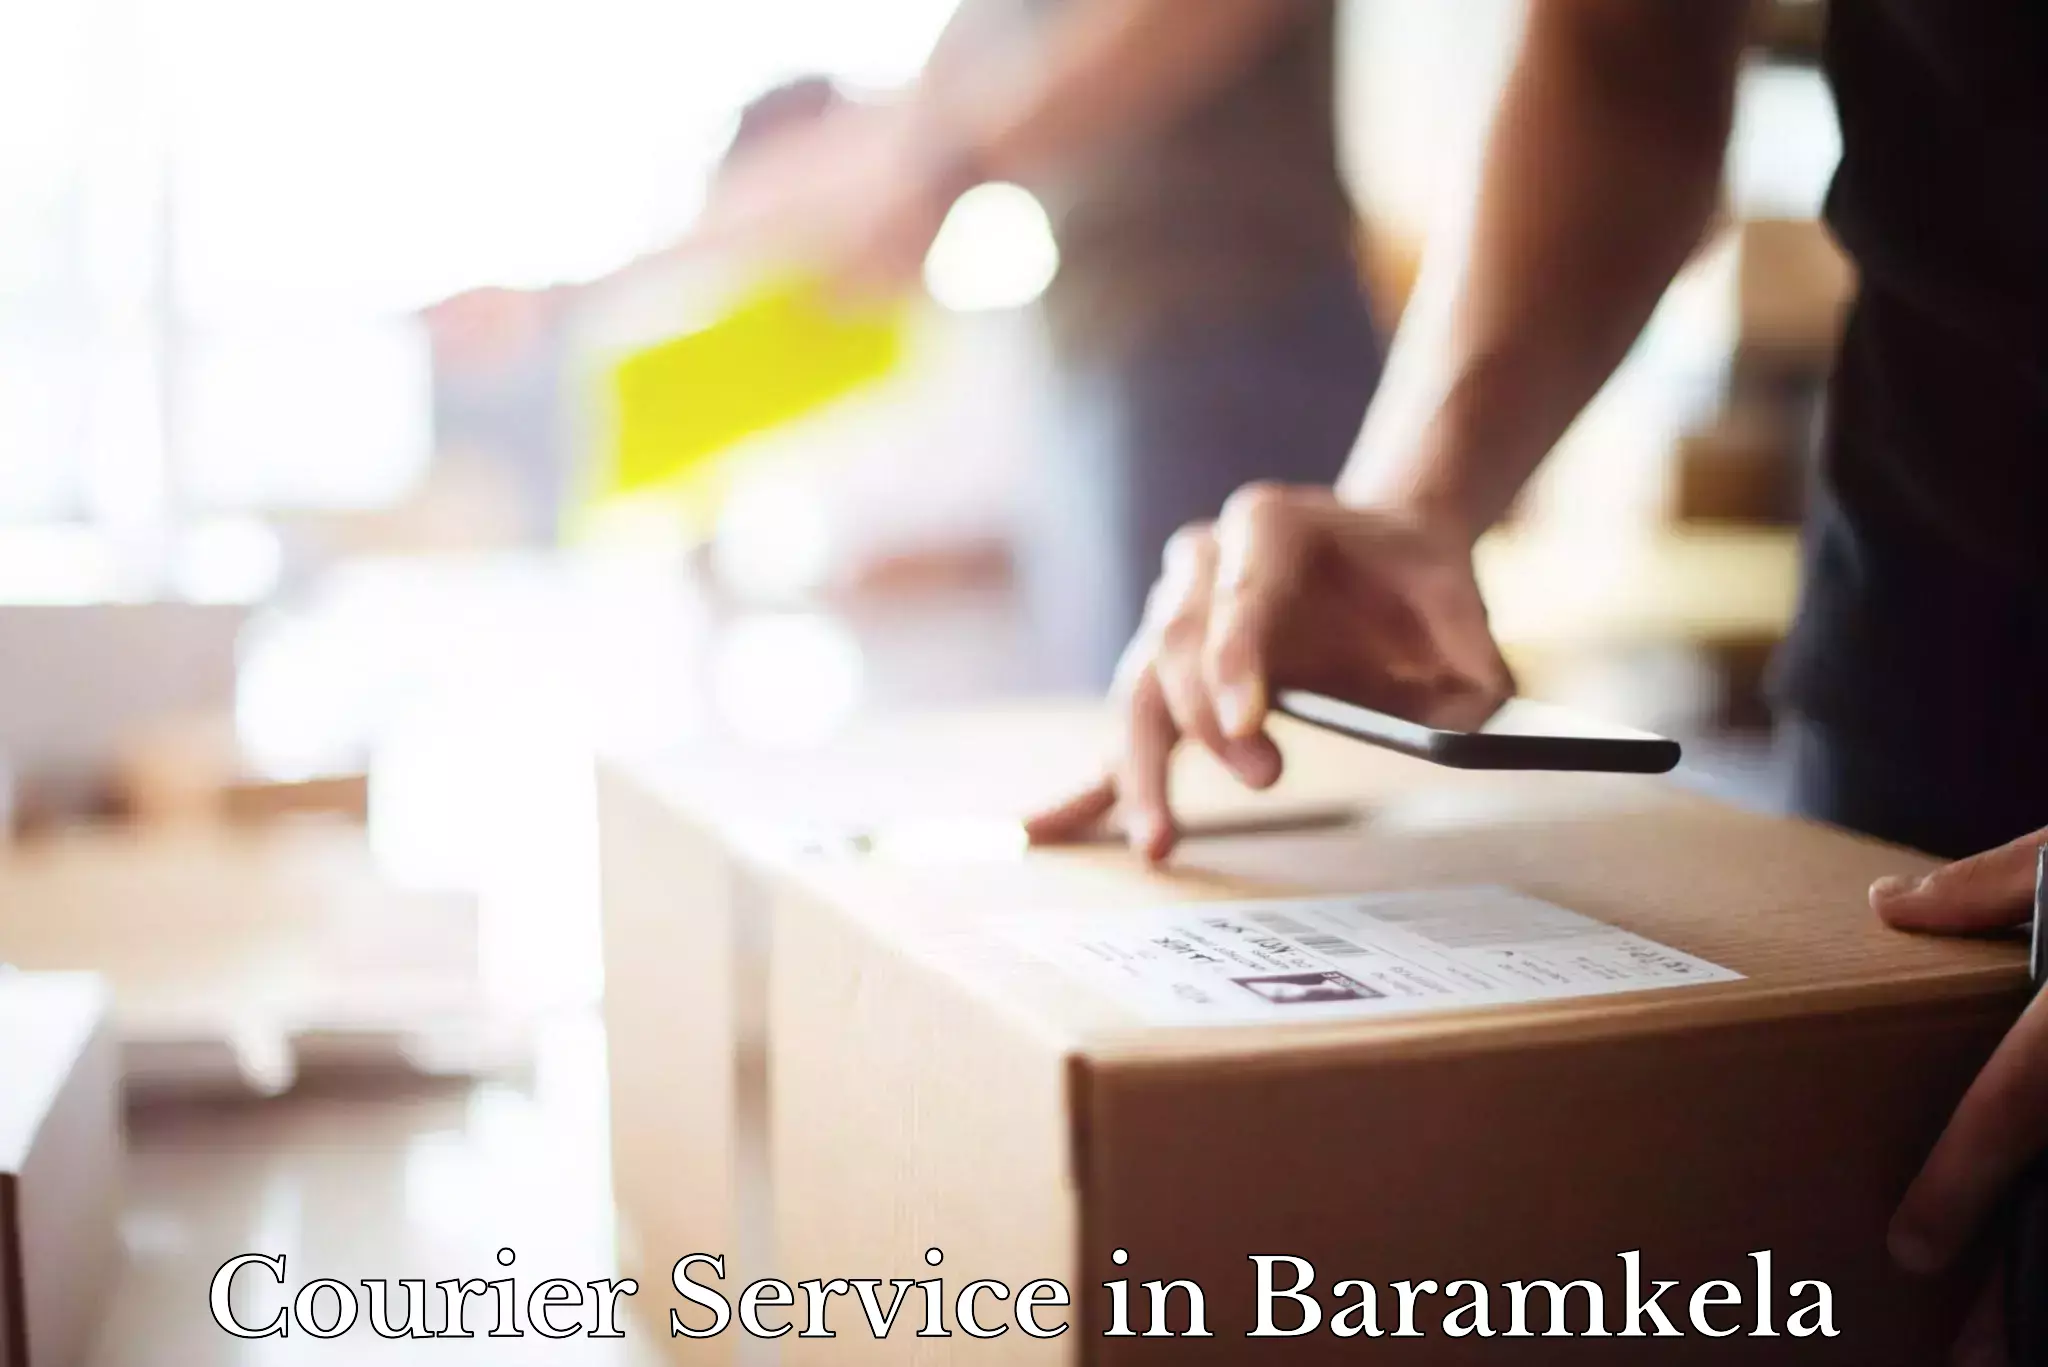 Medical delivery services in Baramkela